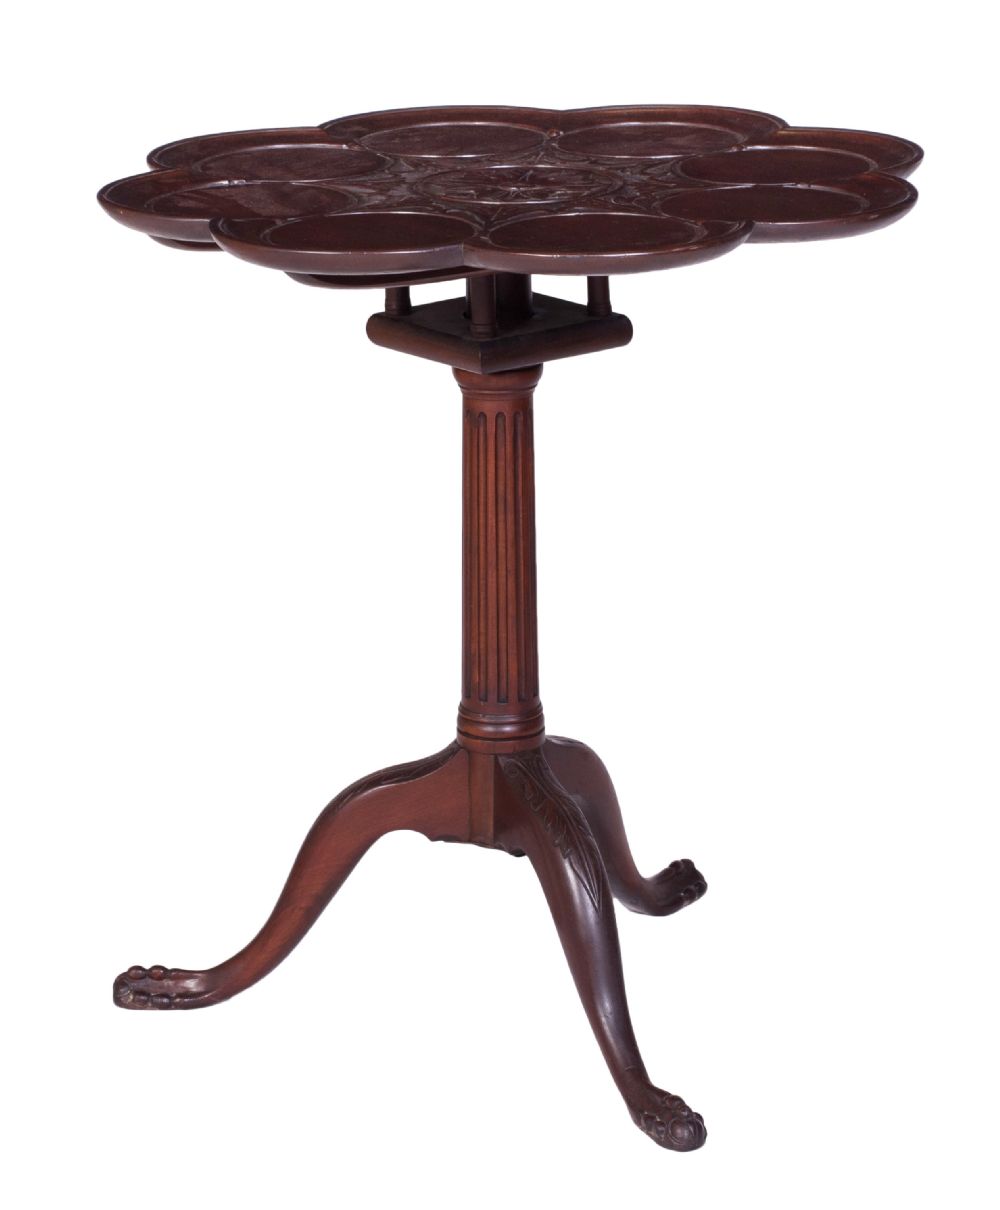 Georgian Style Table at Dolan's Art Auction House